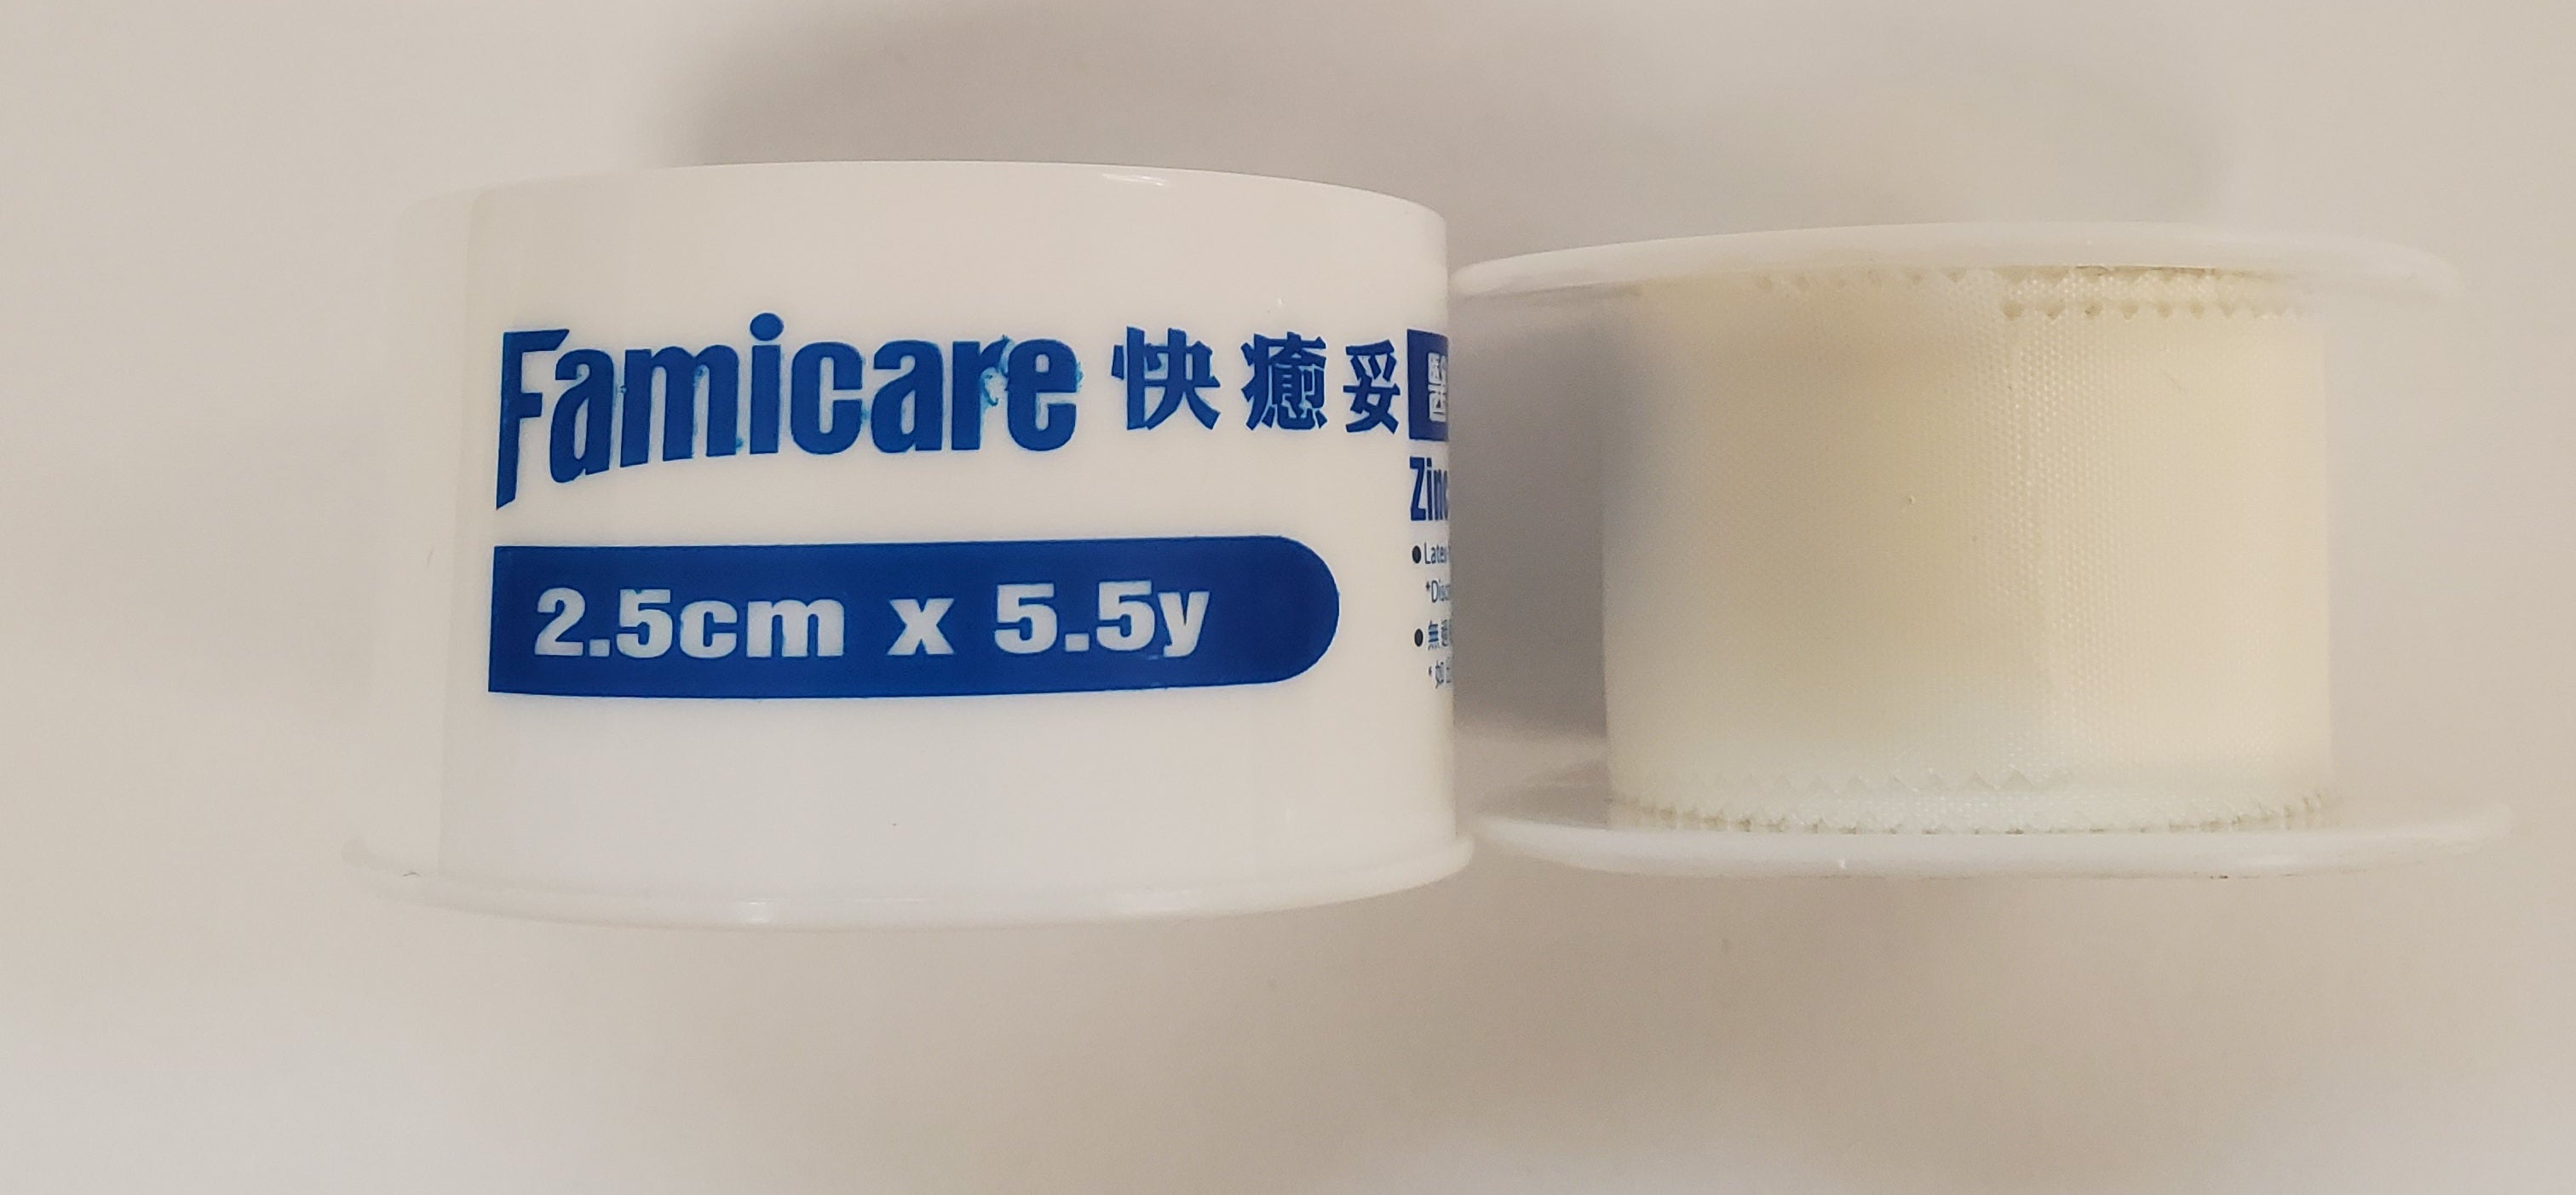 Famicare Zinc Oxide Silk Adhesive Tape (White) - 2.5cm X 5.5y